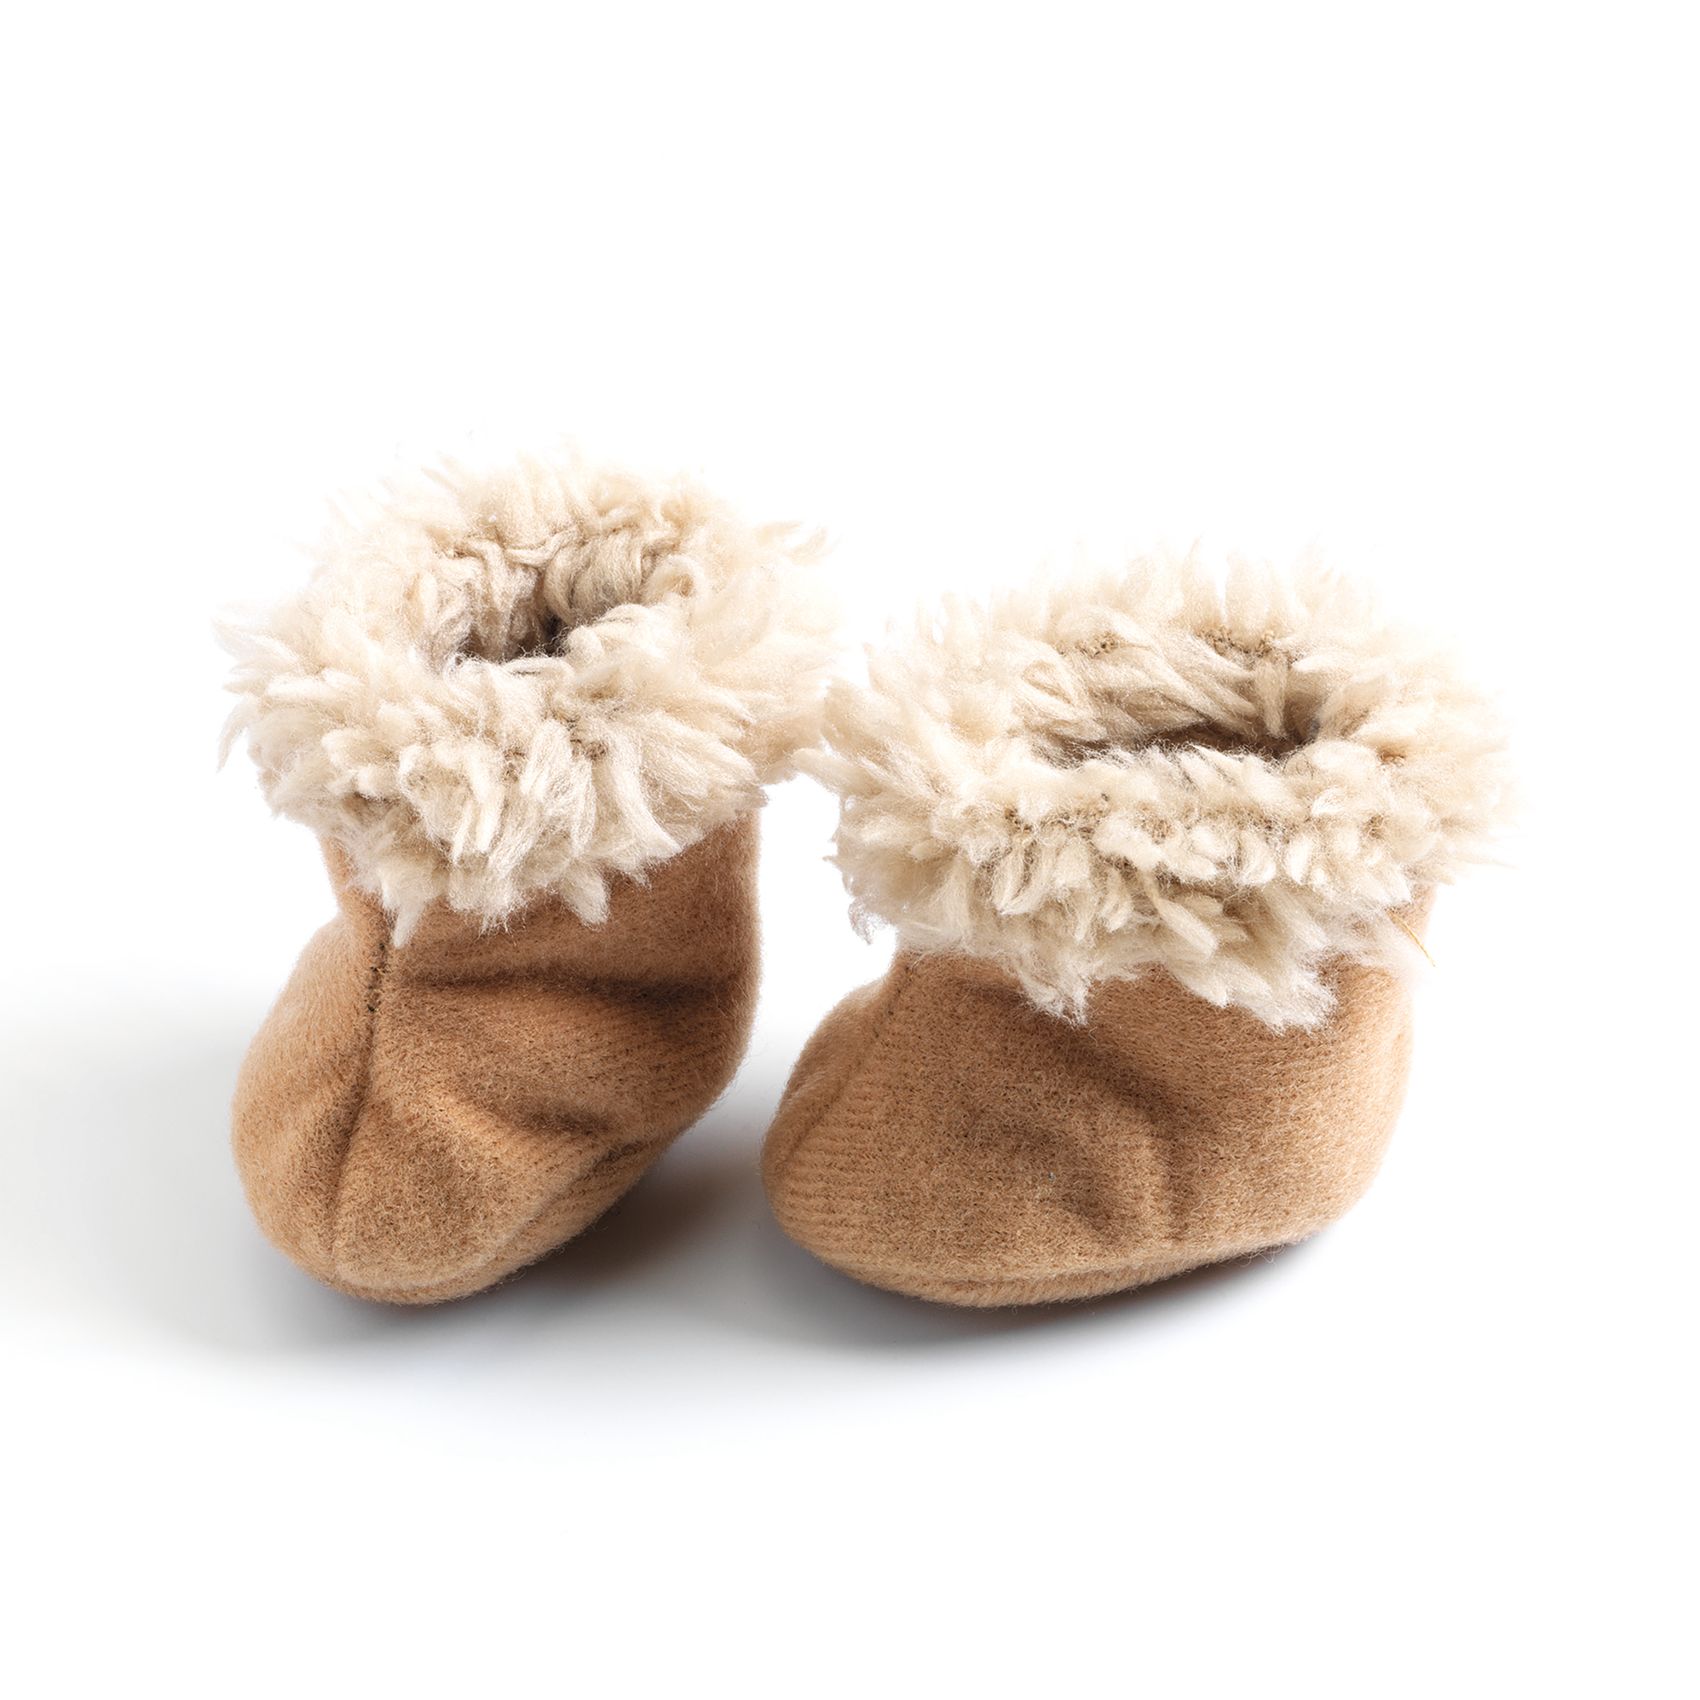 Baby Pomea slippers by Djeco